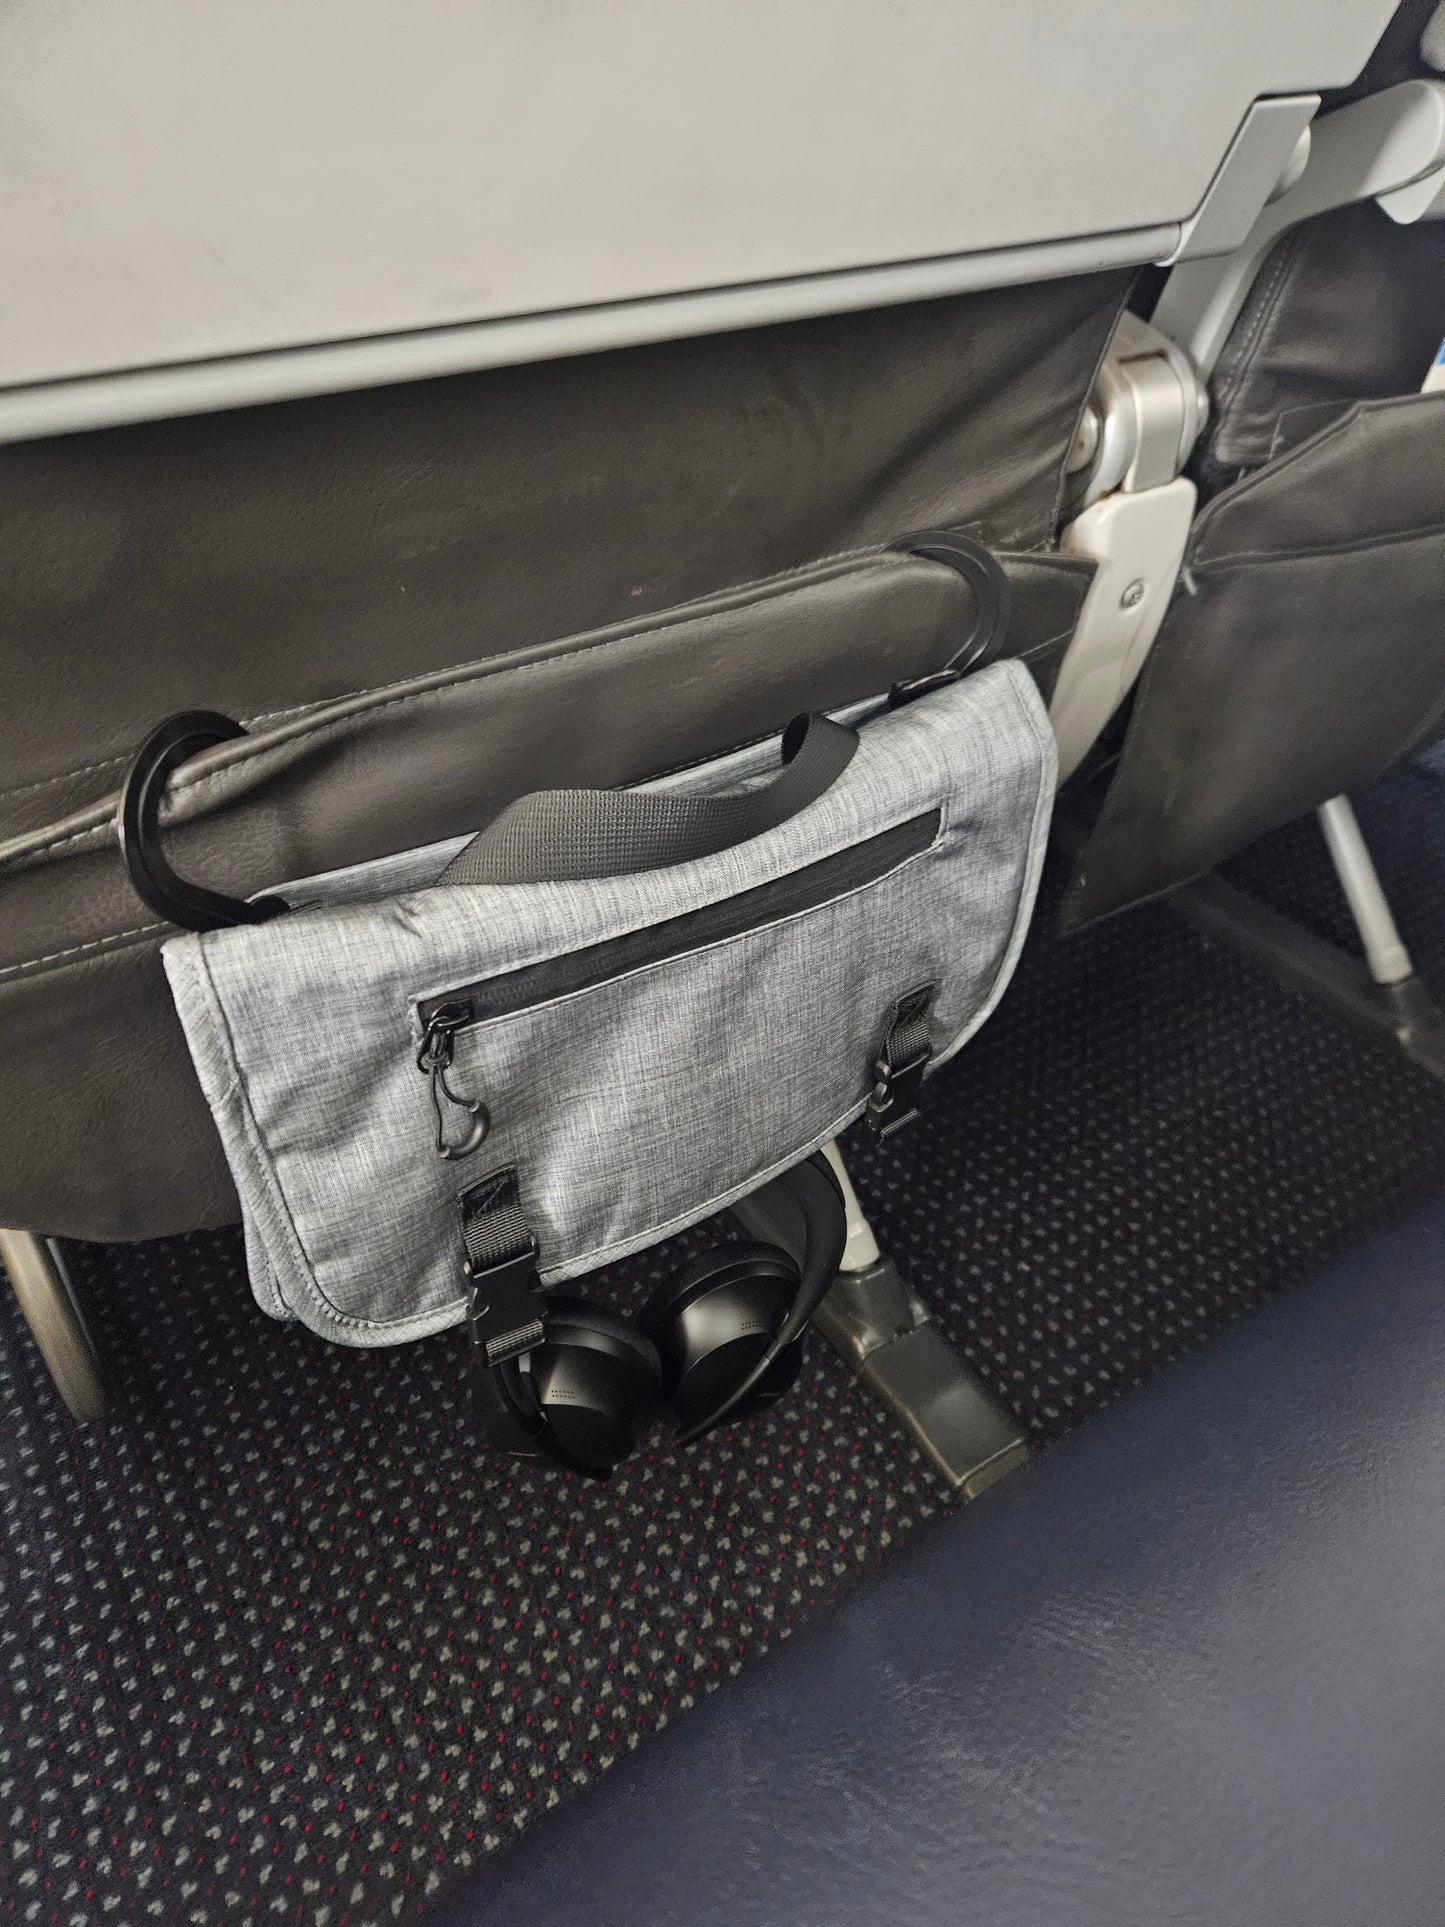 Jet Pocket hanging with pivoting hooks on airplane seat back pocket 